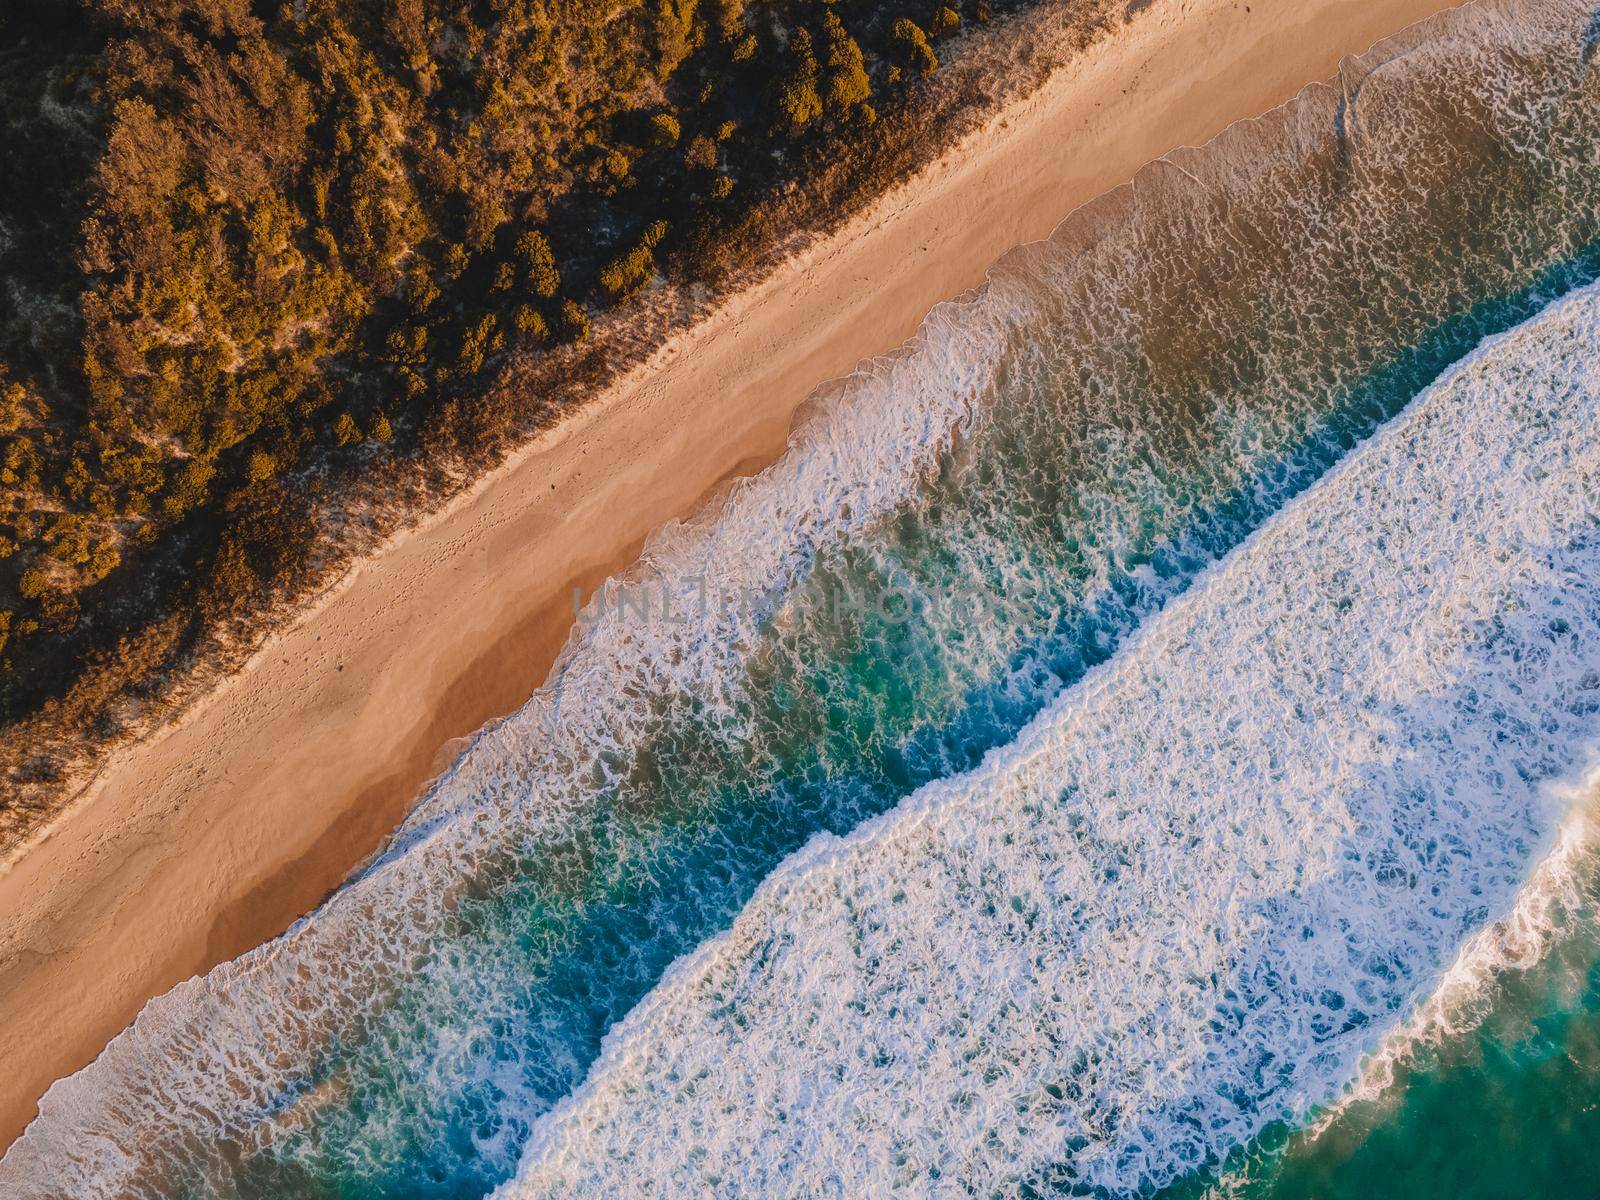 Aerial Photo of beach, Lake Tabourie beach, Australia by braydenstanfordphoto